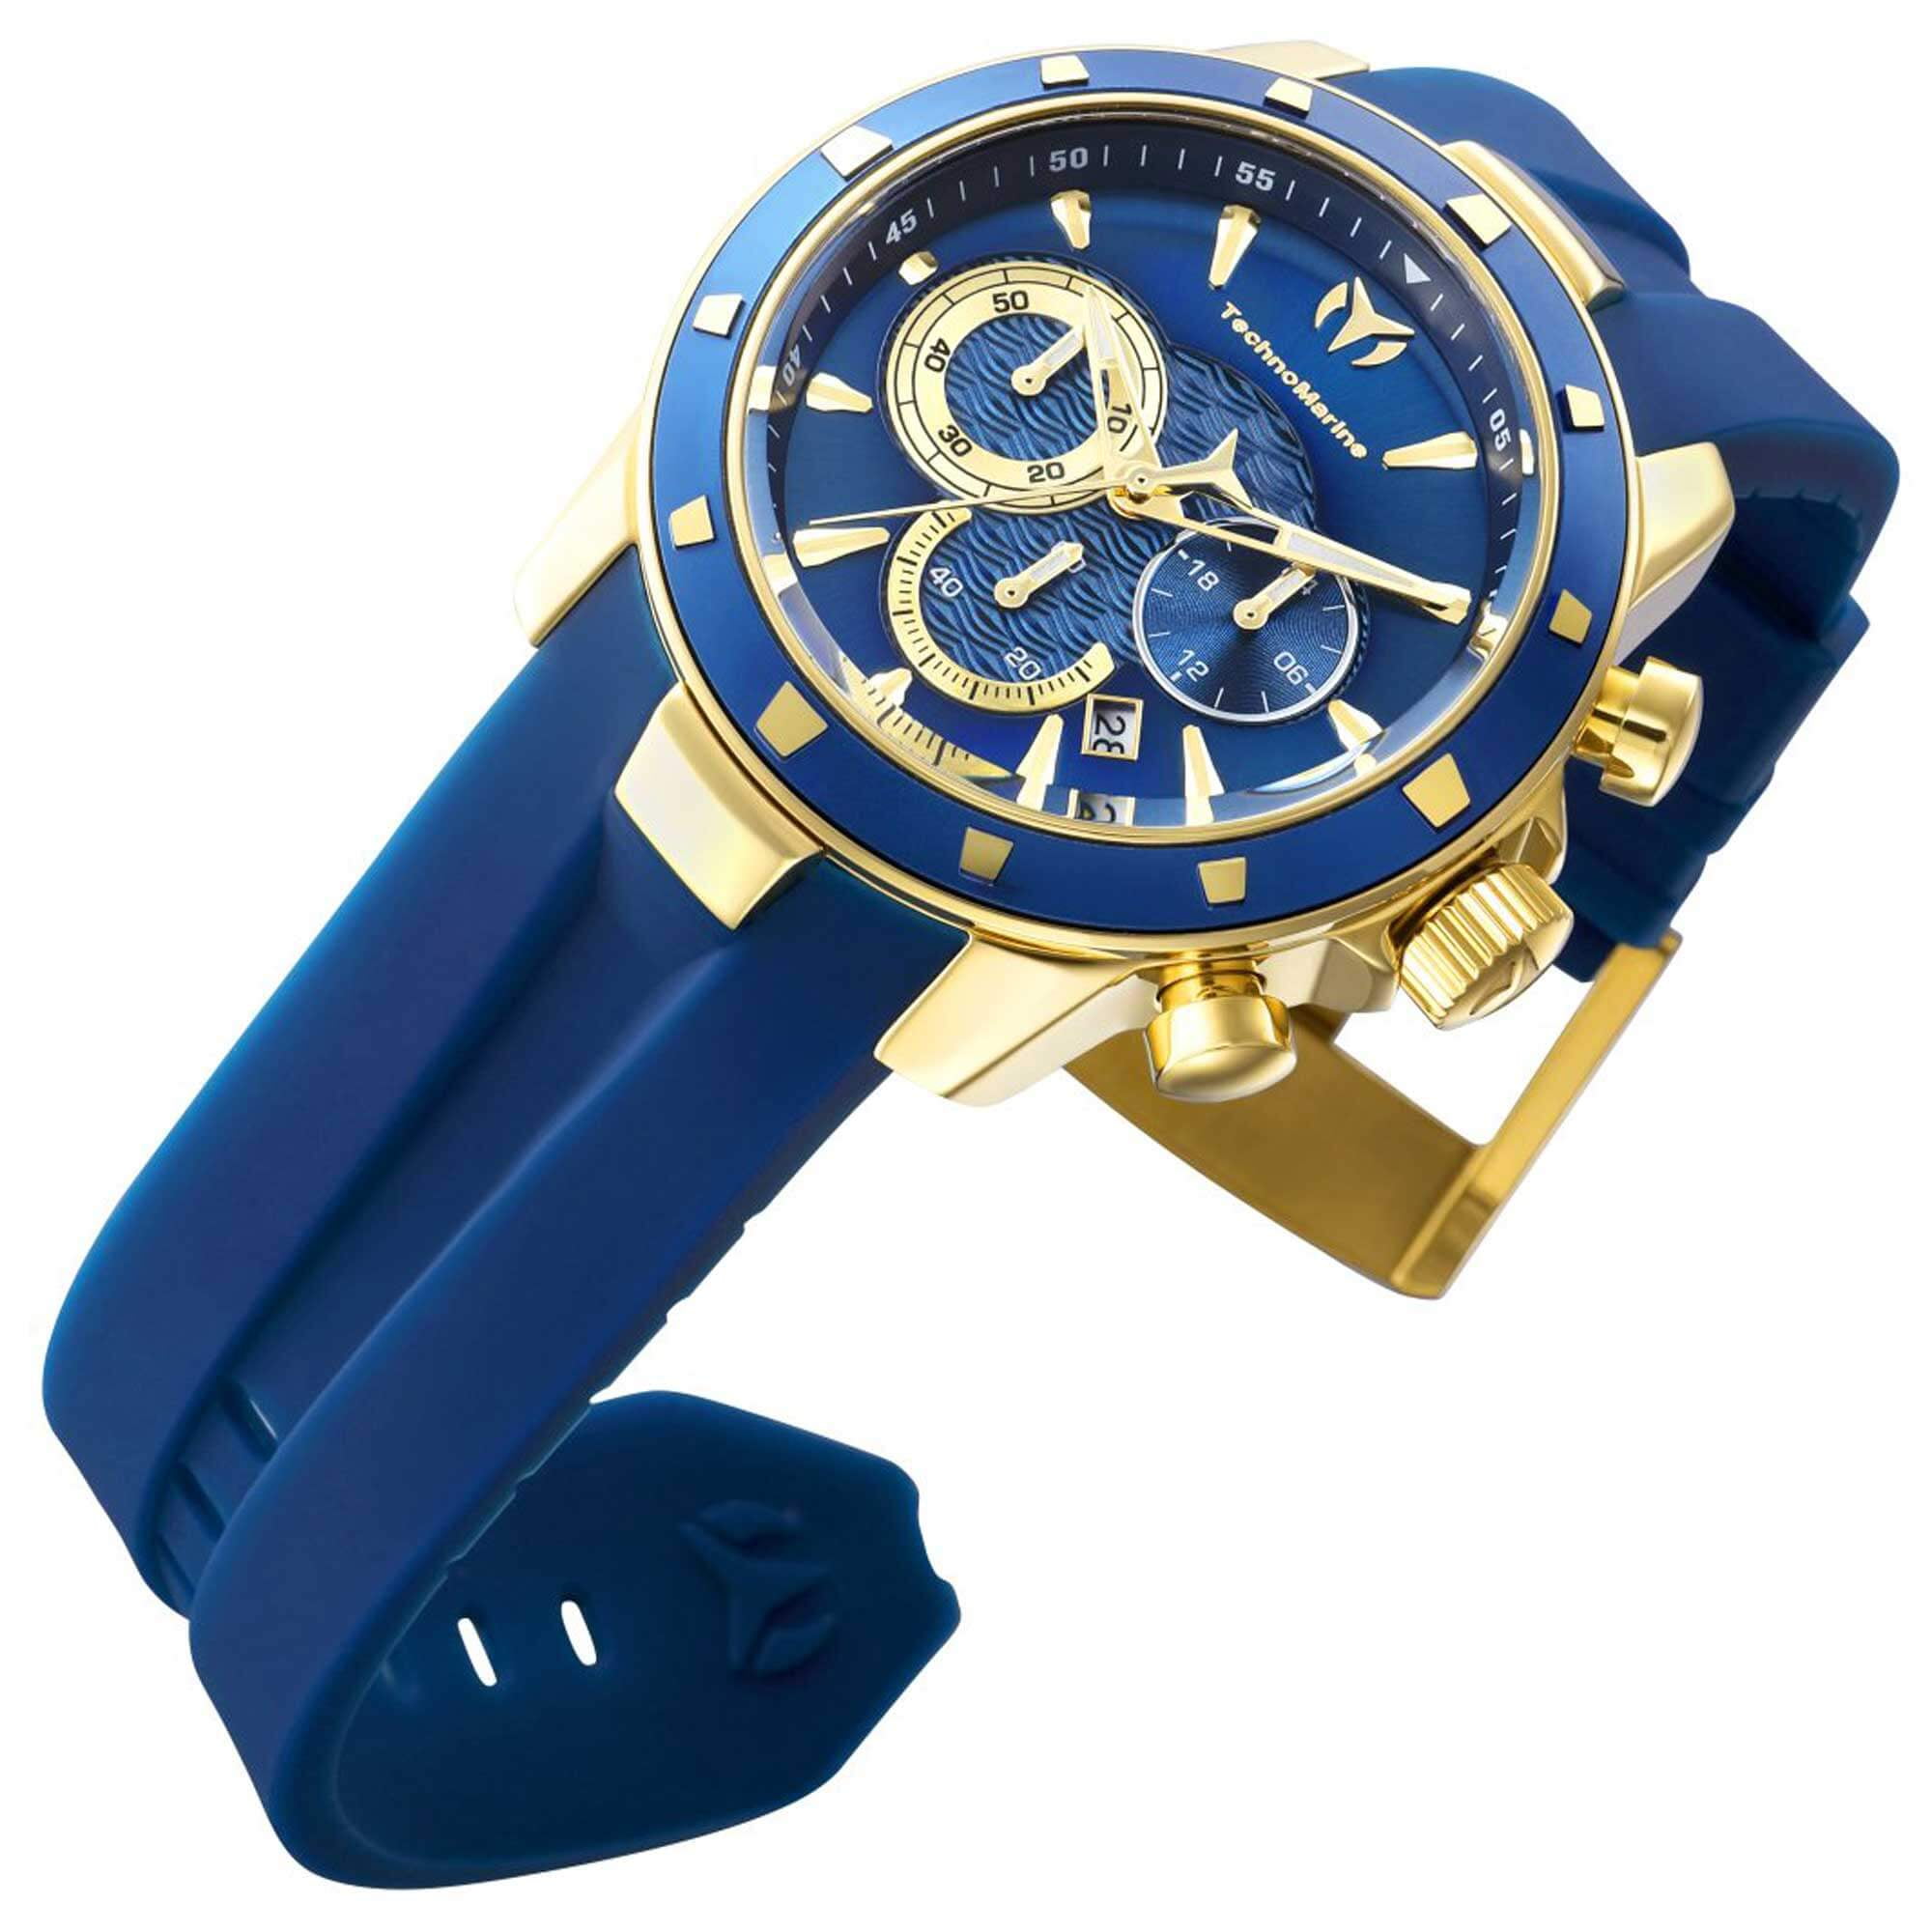 Technomarine UF6 Chronograph Quartz Blue Dial Men's Watch TM-621003